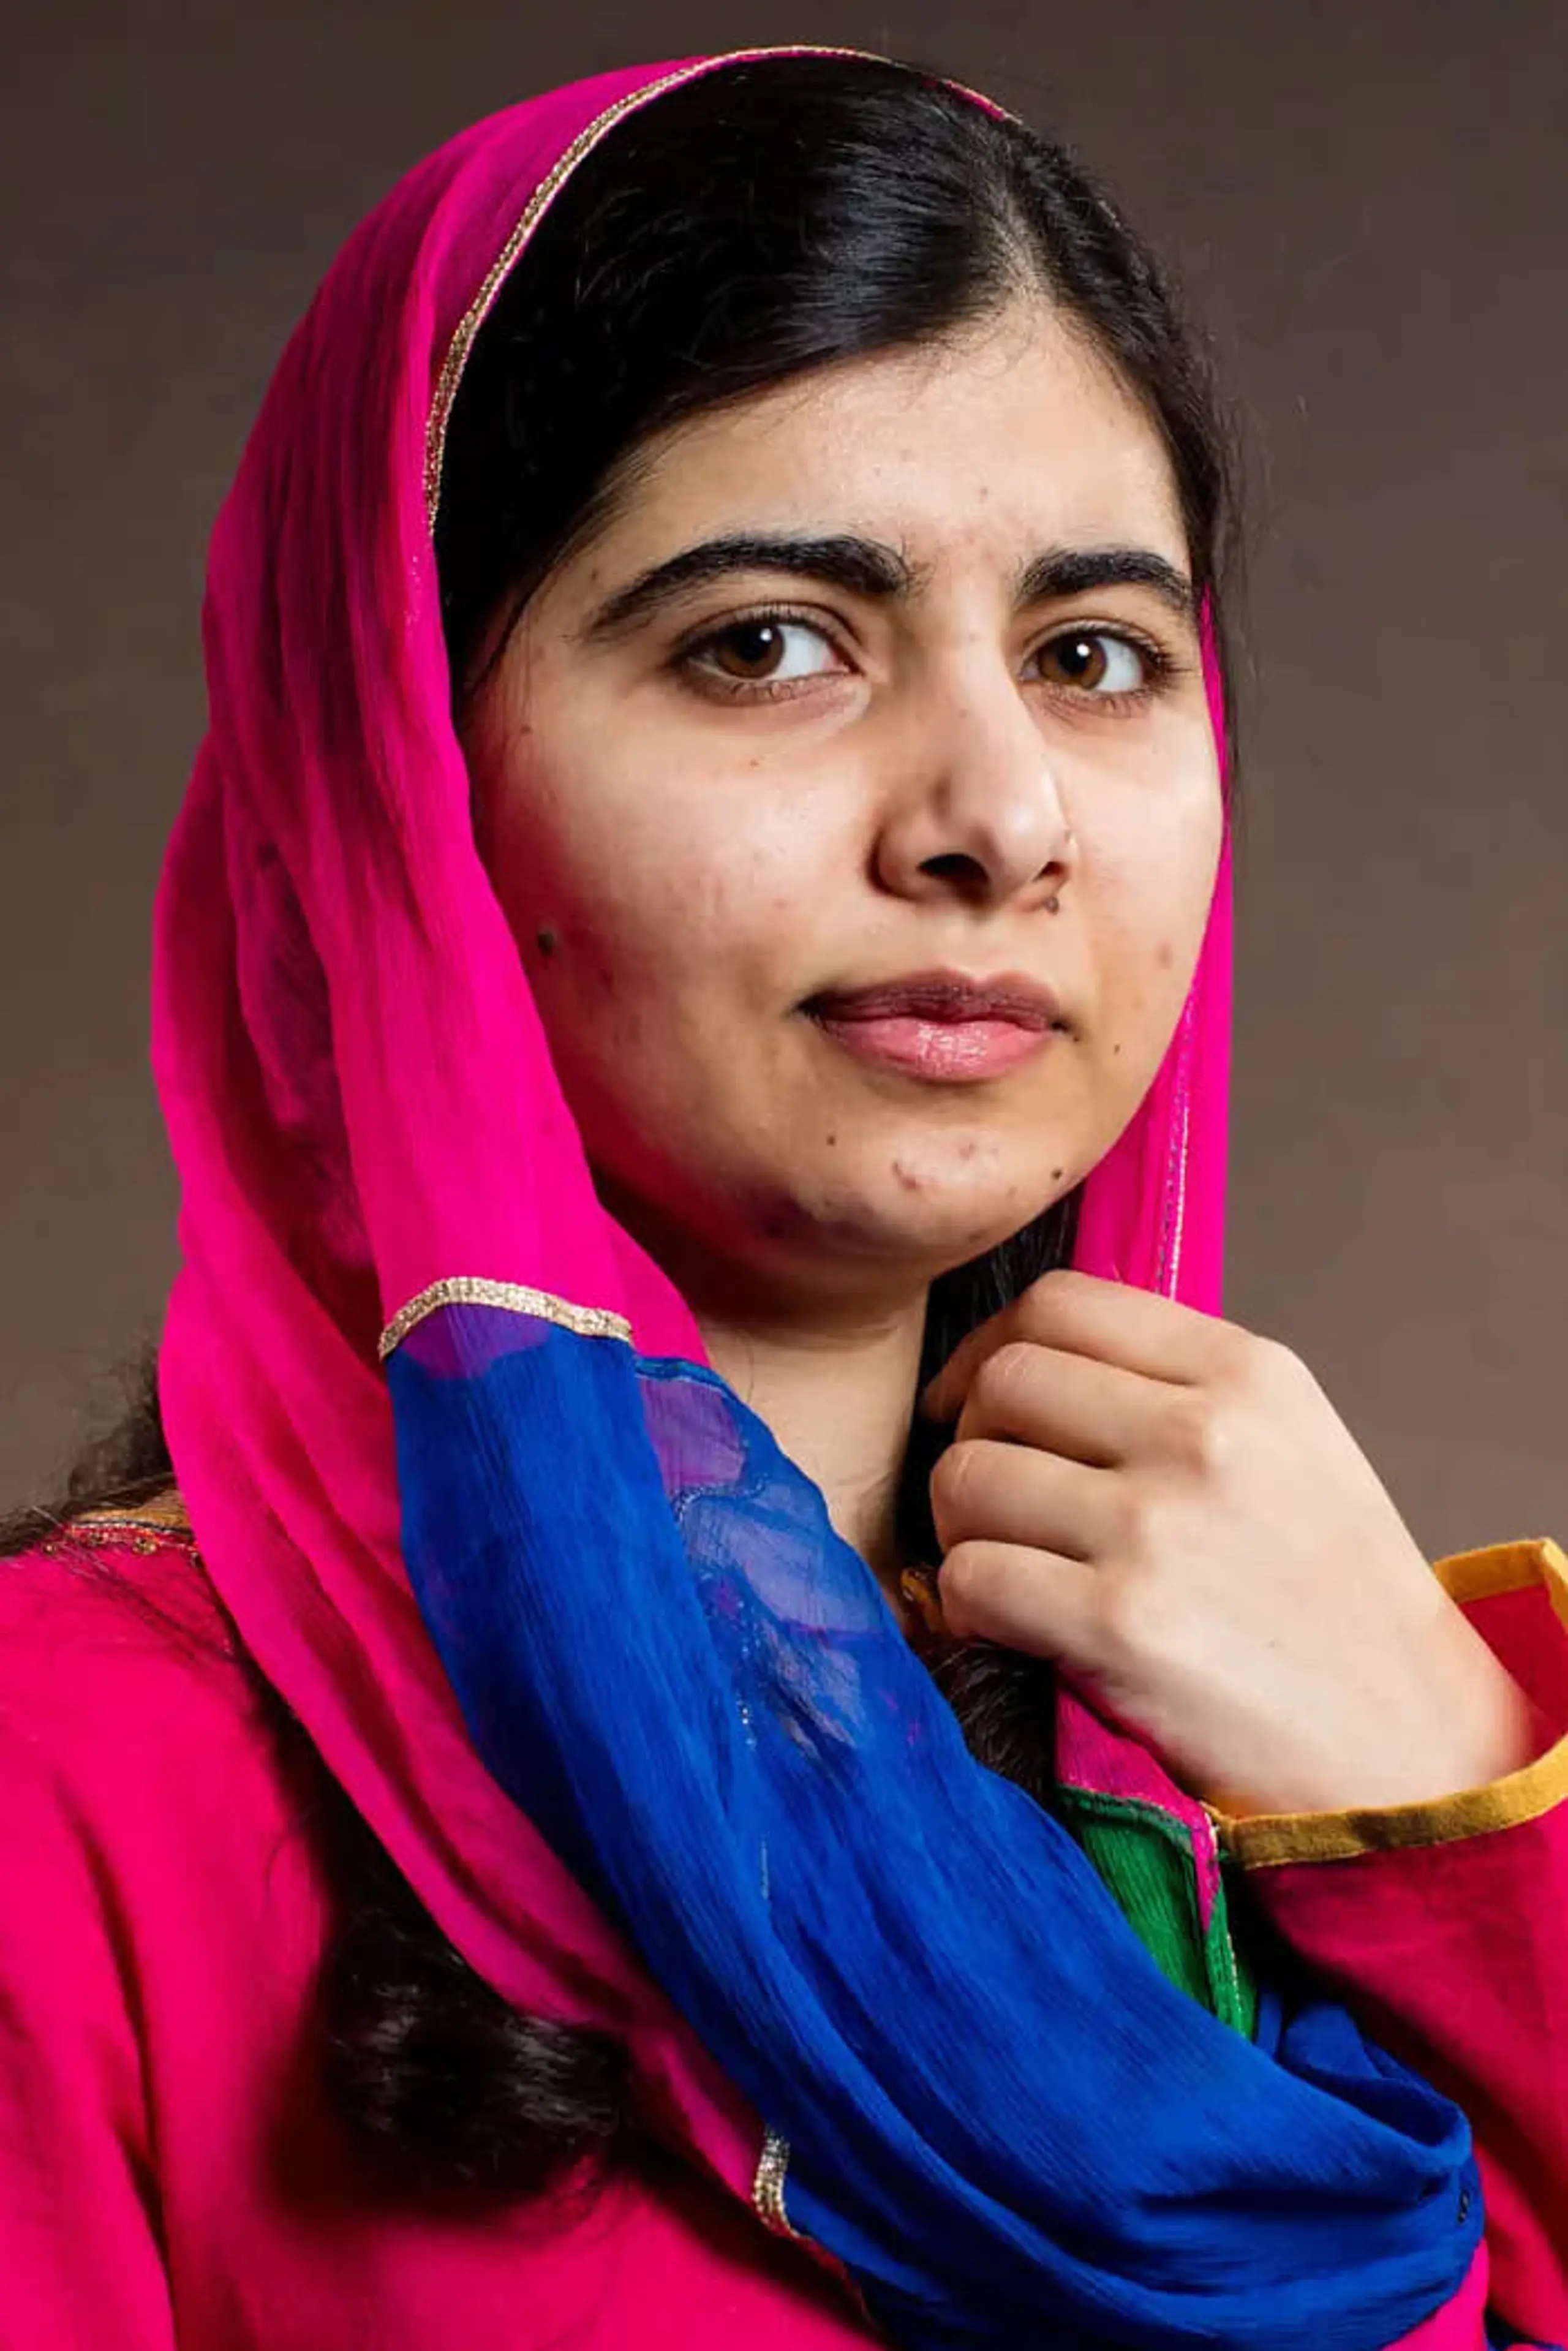 Foto von Malala Yousafzai